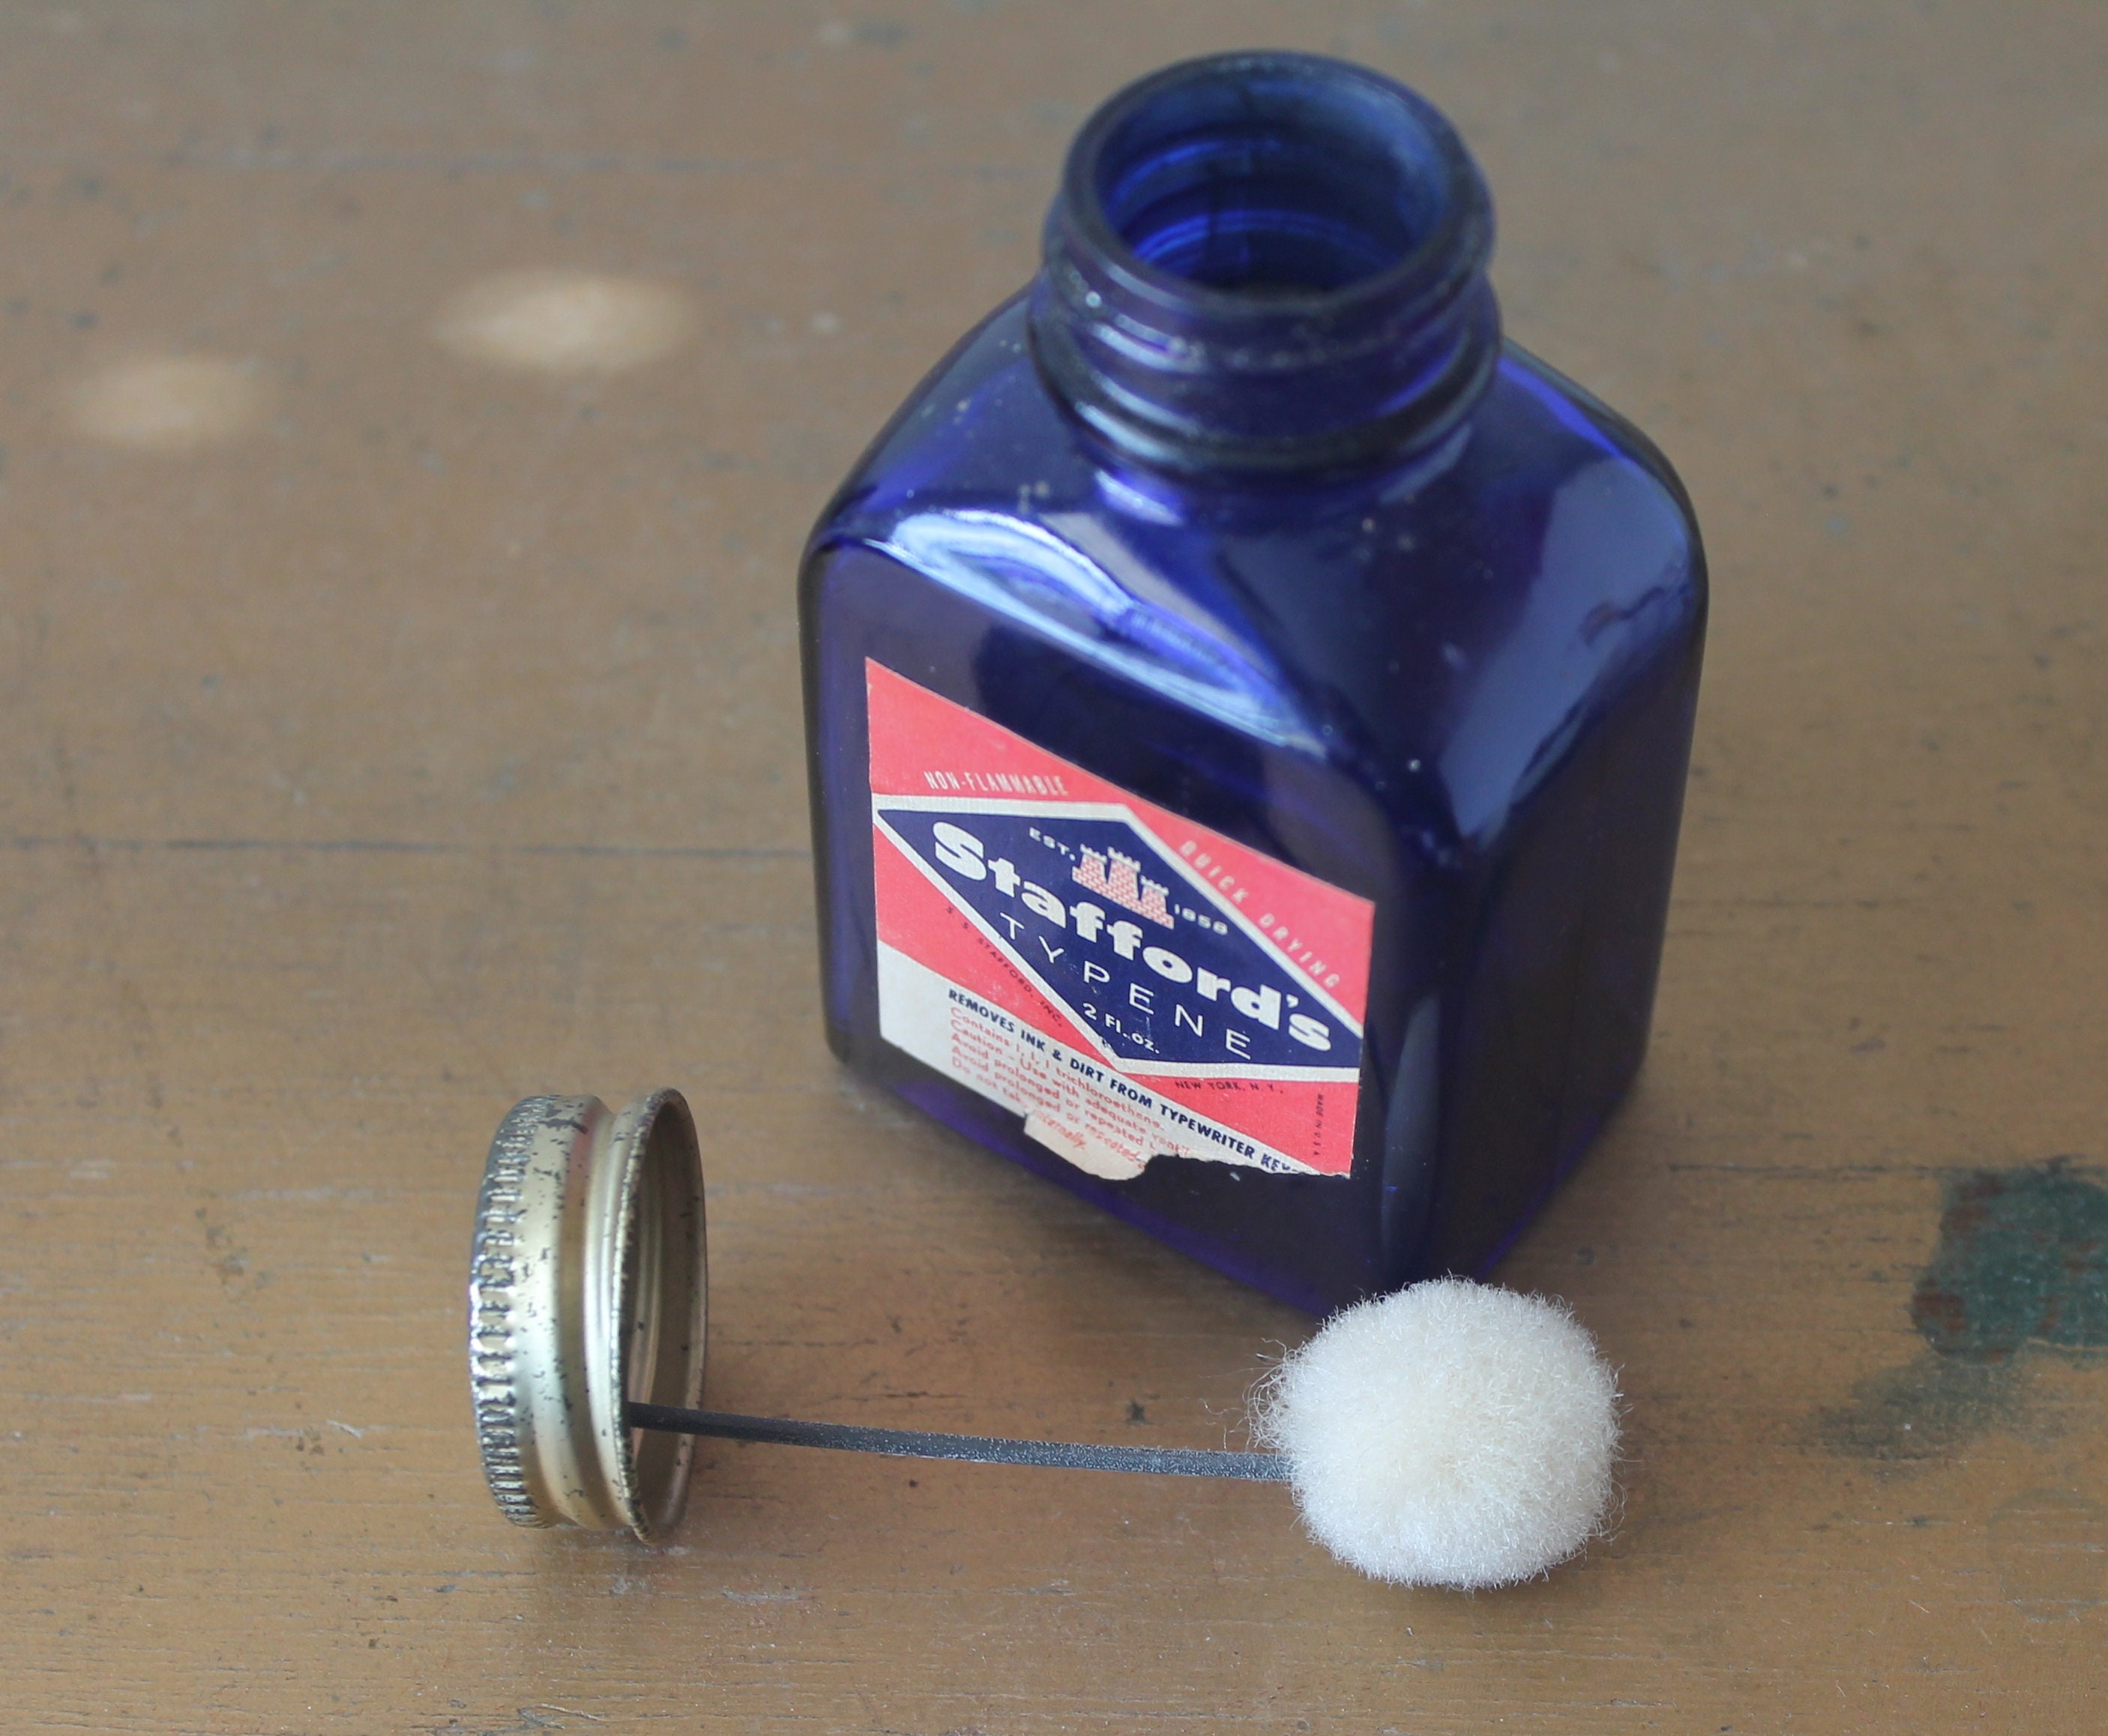  Amodex Ink and Stain Remover Unique Soap Liquid Formula 4 fl oz  Bottle : Industrial & Scientific